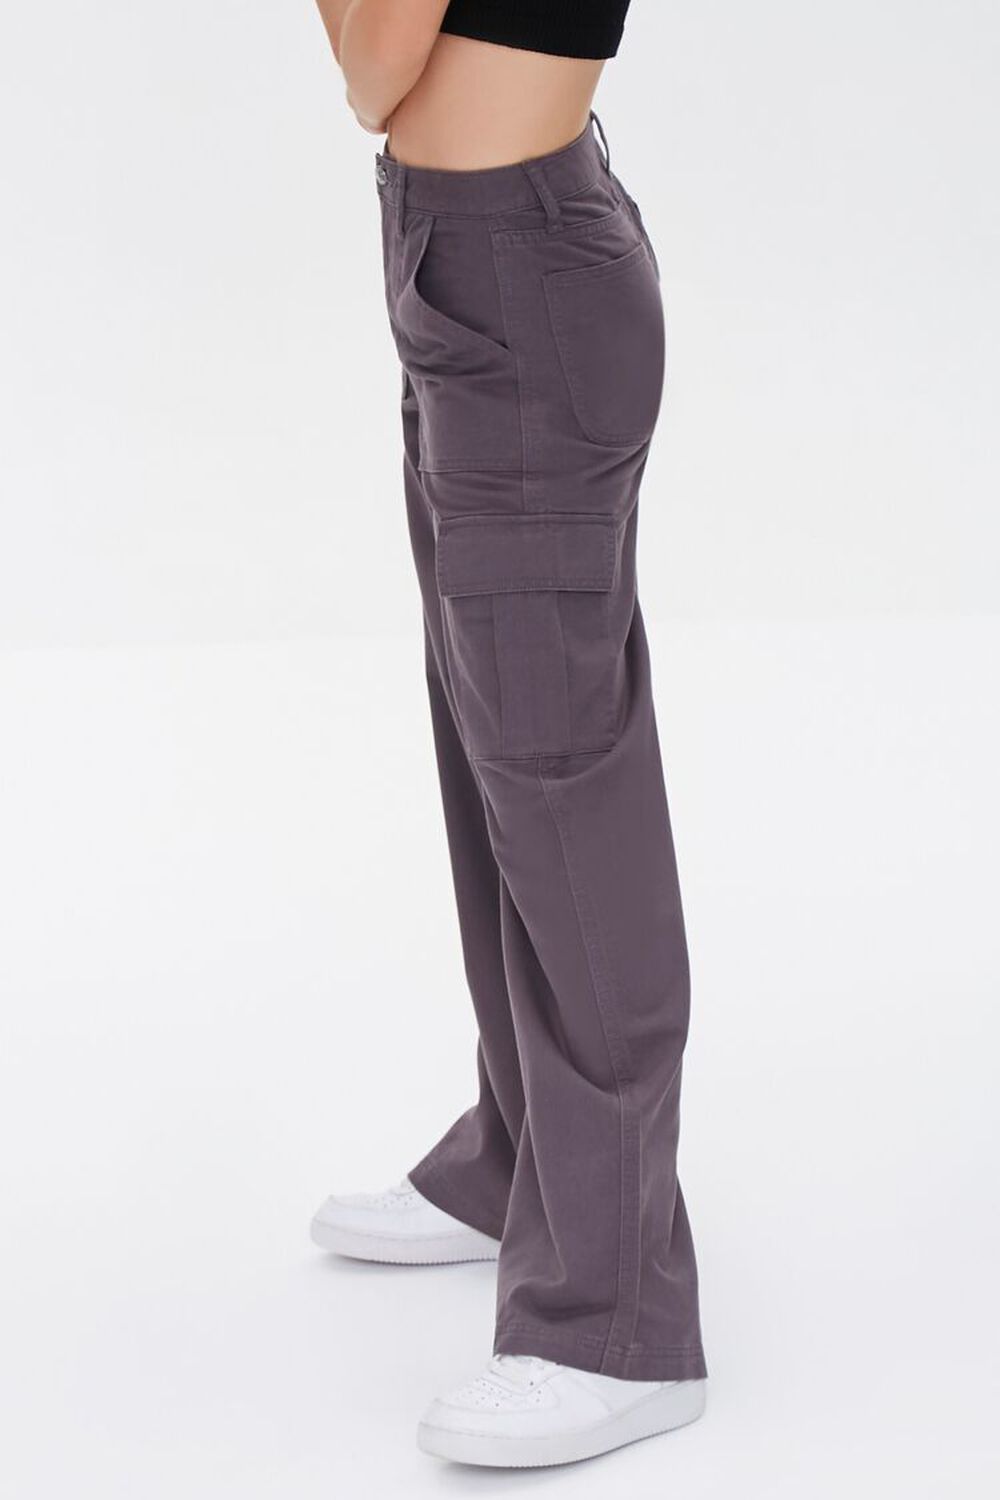 CHARCOAL Straight-Leg Cargo Pants, image 3